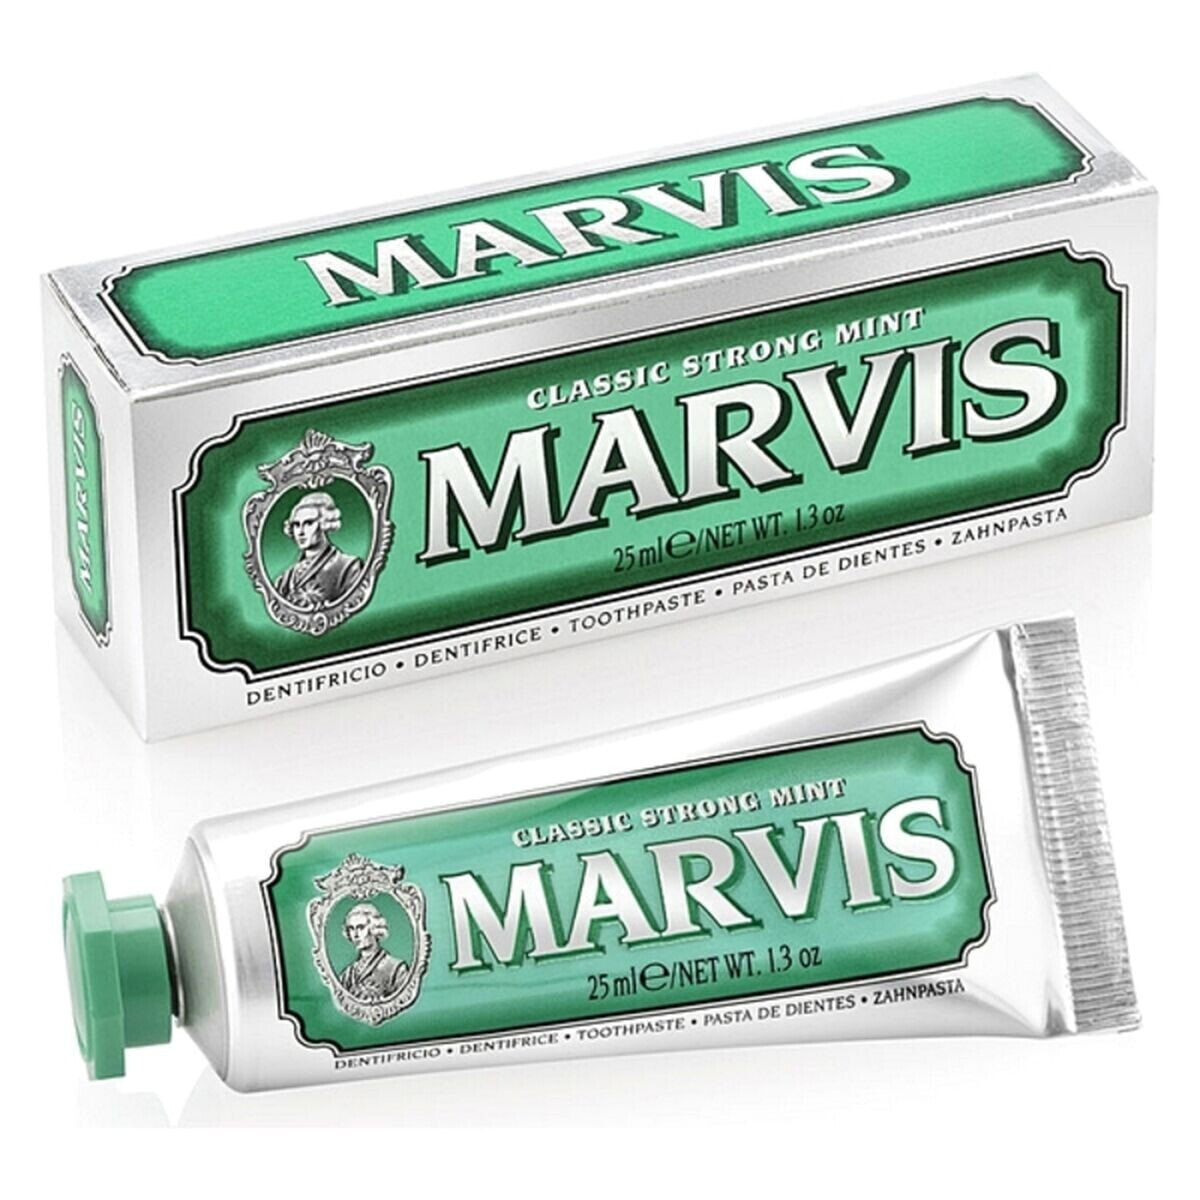 Зубная паста Marvis Classic Мята (25 ml)